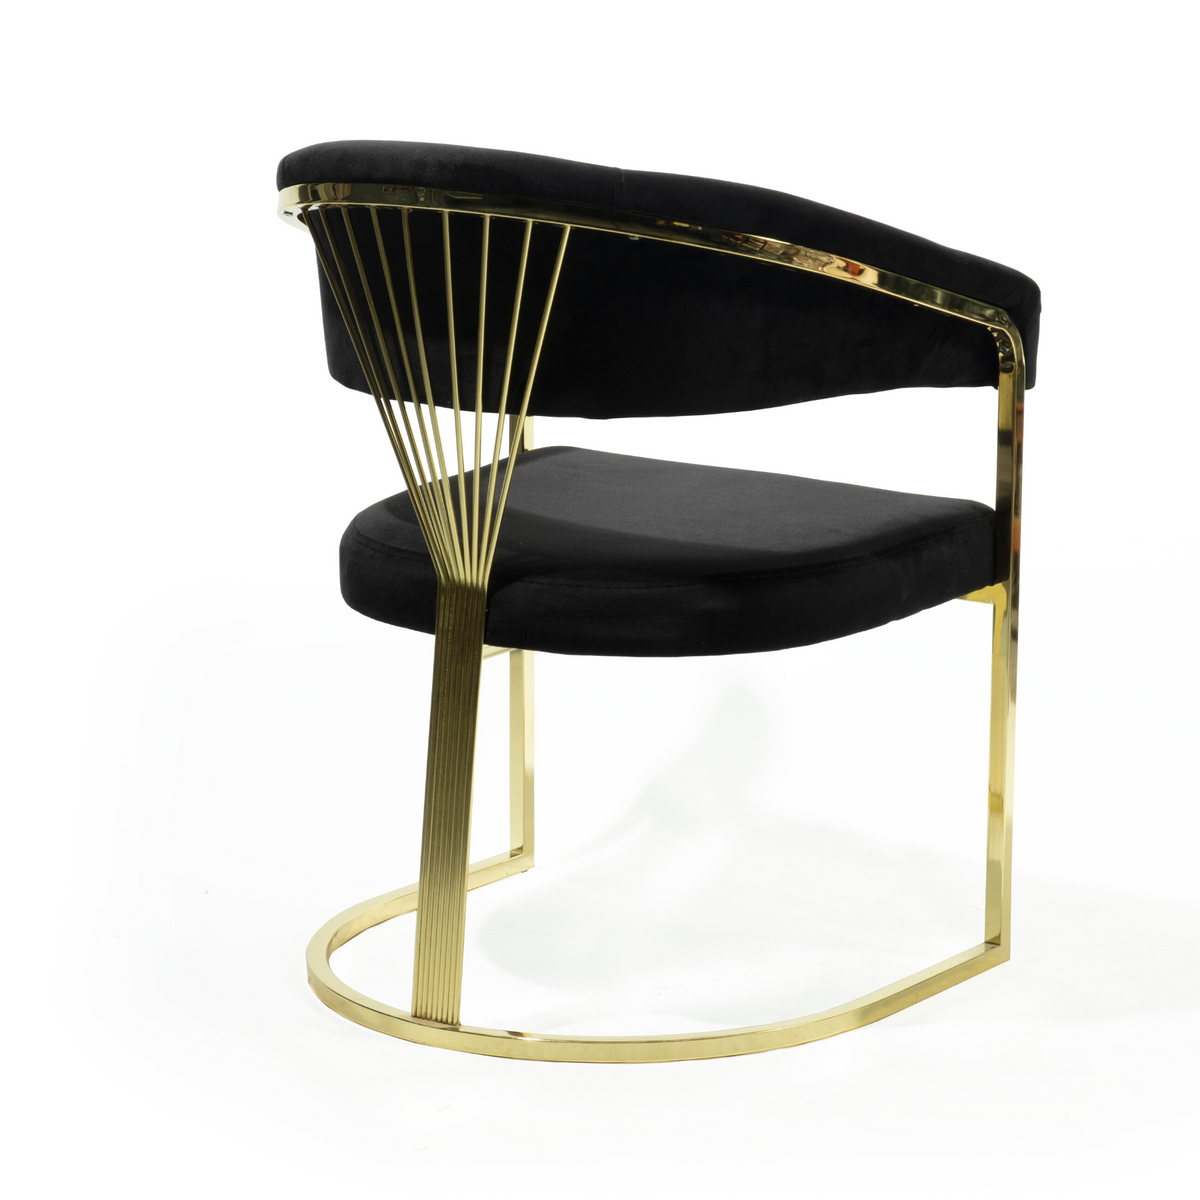 Kijova, kijova.ca, kiova furniture dining chair navy velvet with gold legs